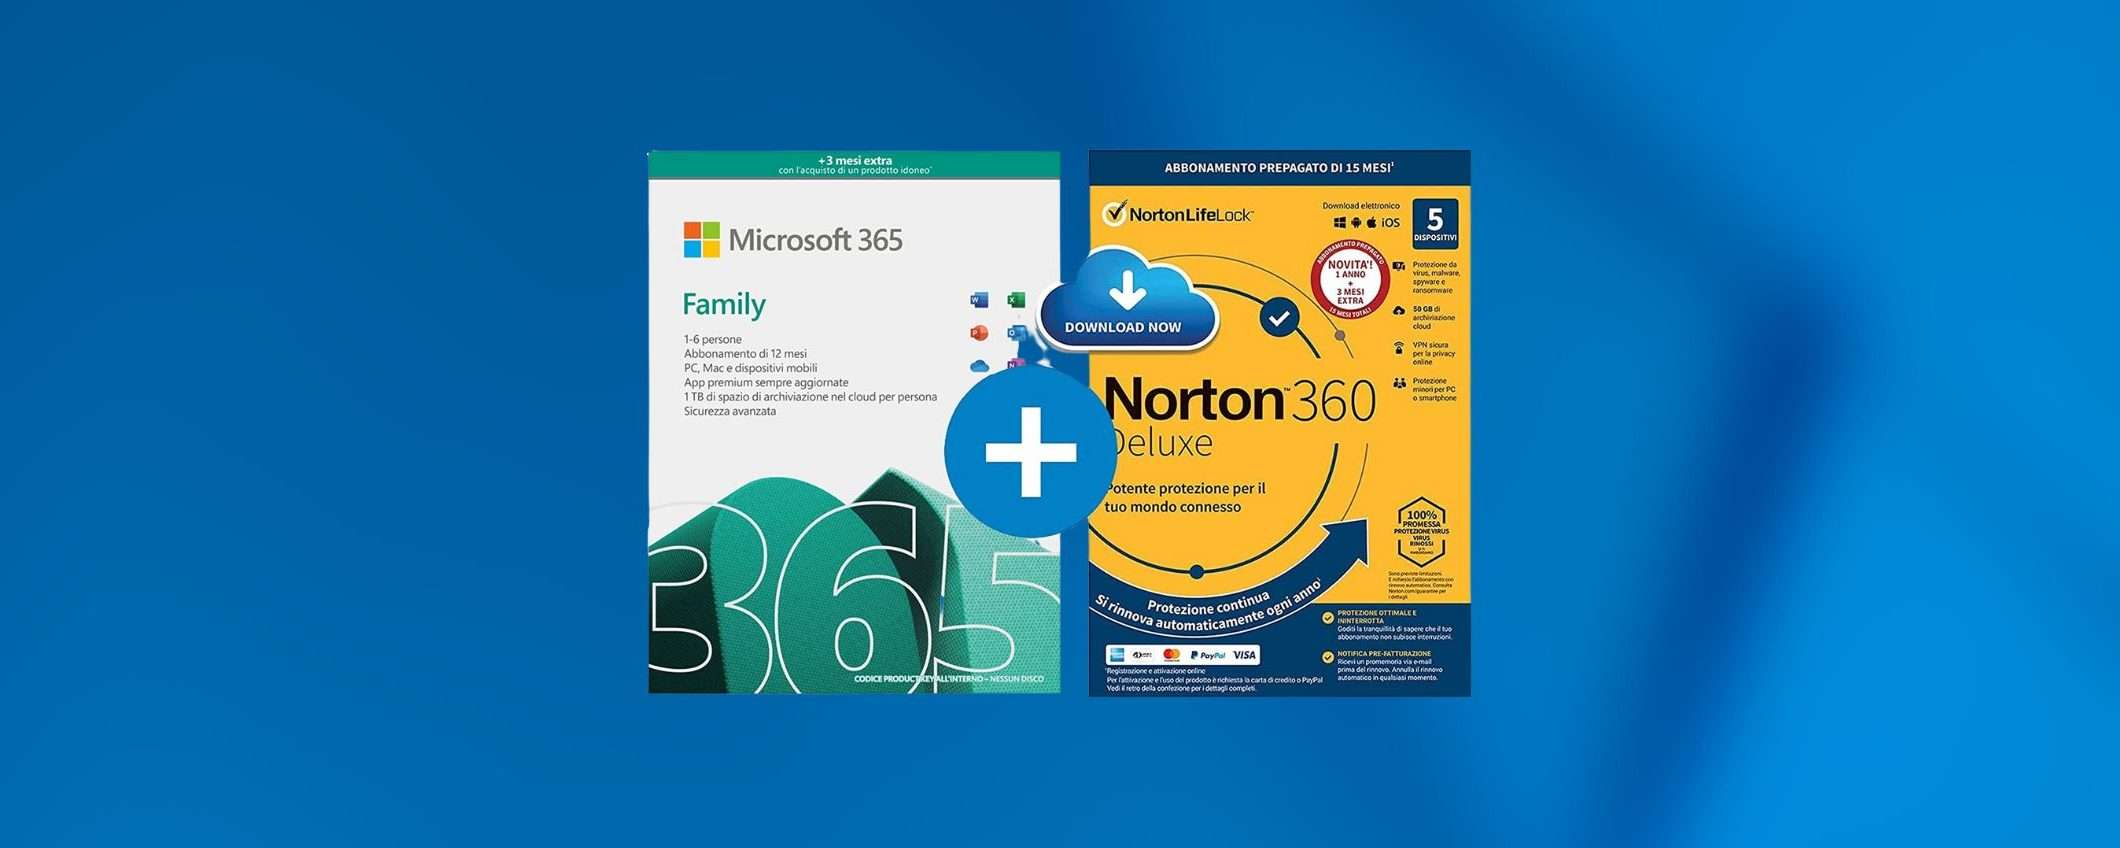 Microsoft 365 Family + Norton Antivirus: bundle in super offerta (-69%)